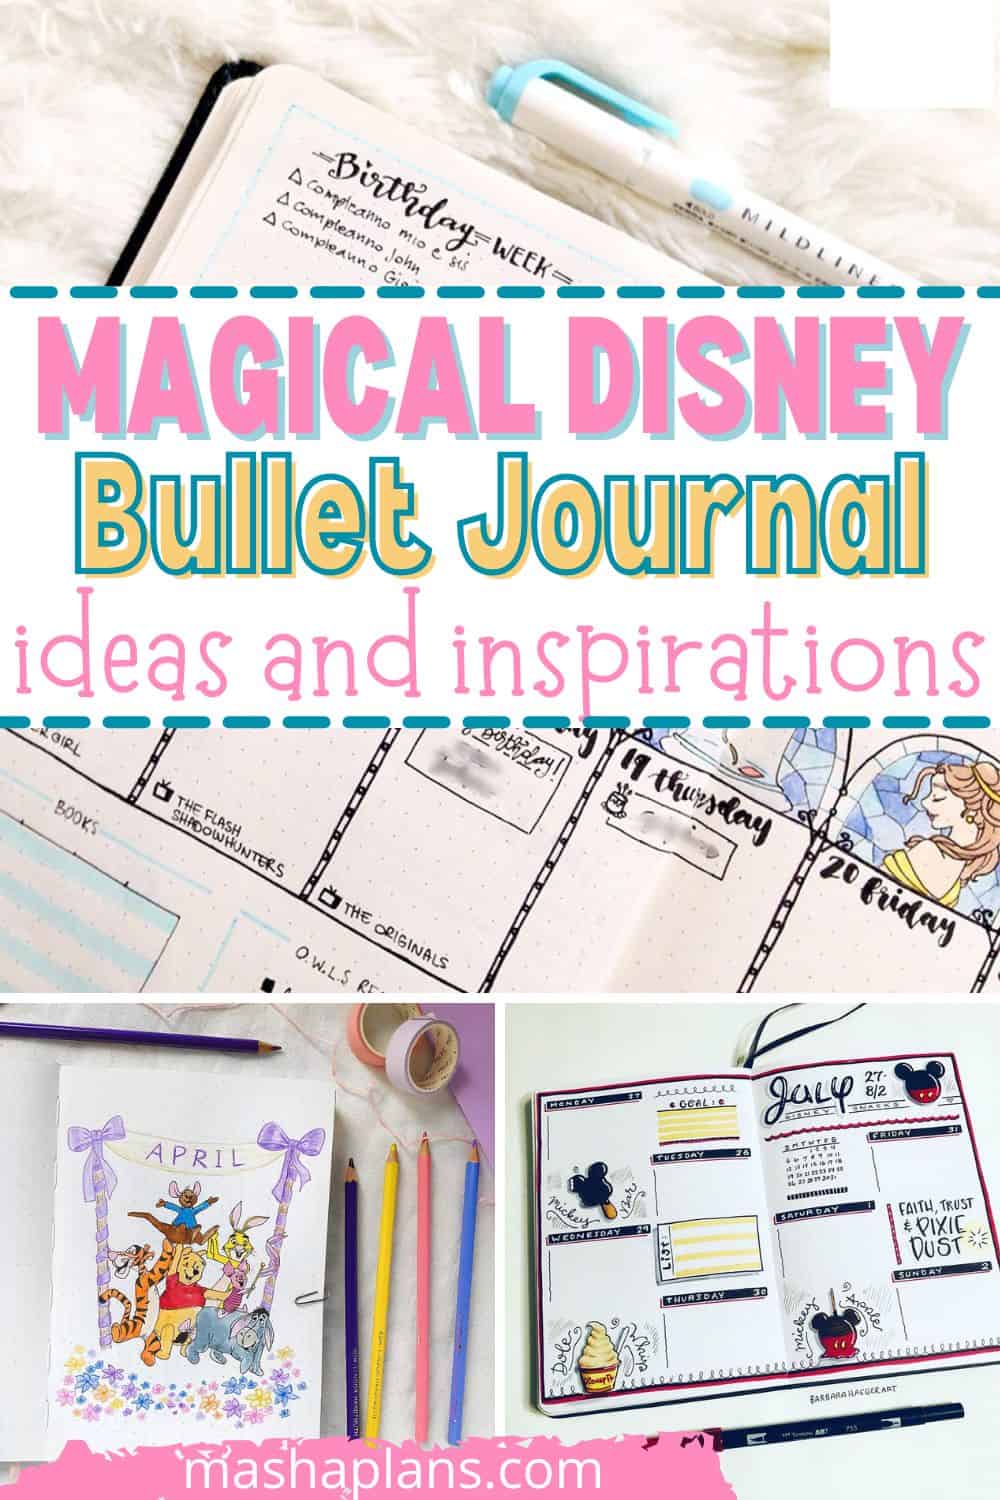 15 Magical Disney Bullet Journal Ideas